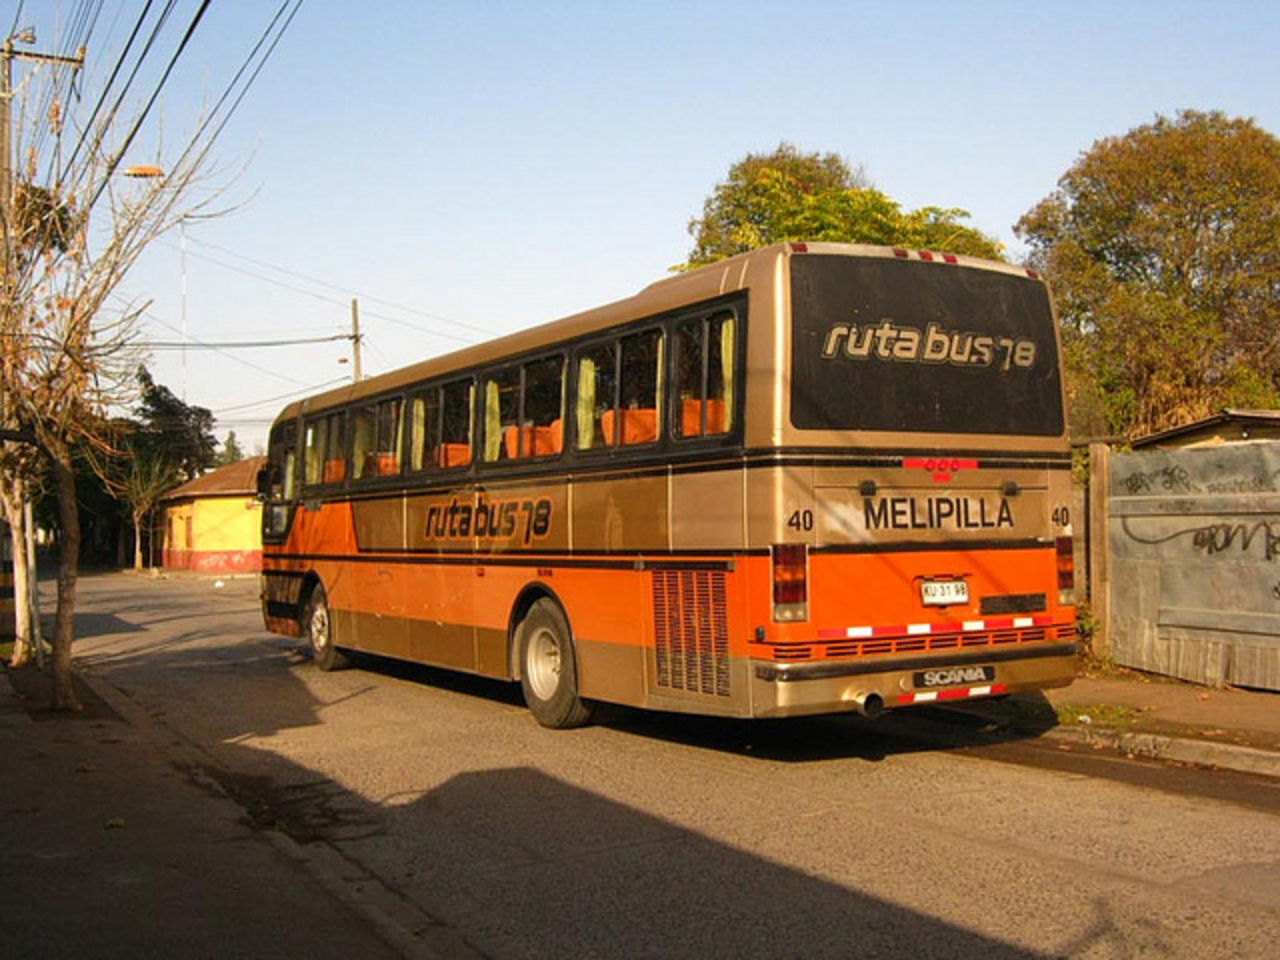 Busscar Elbuss340 | Flickr - Photo Sharing!